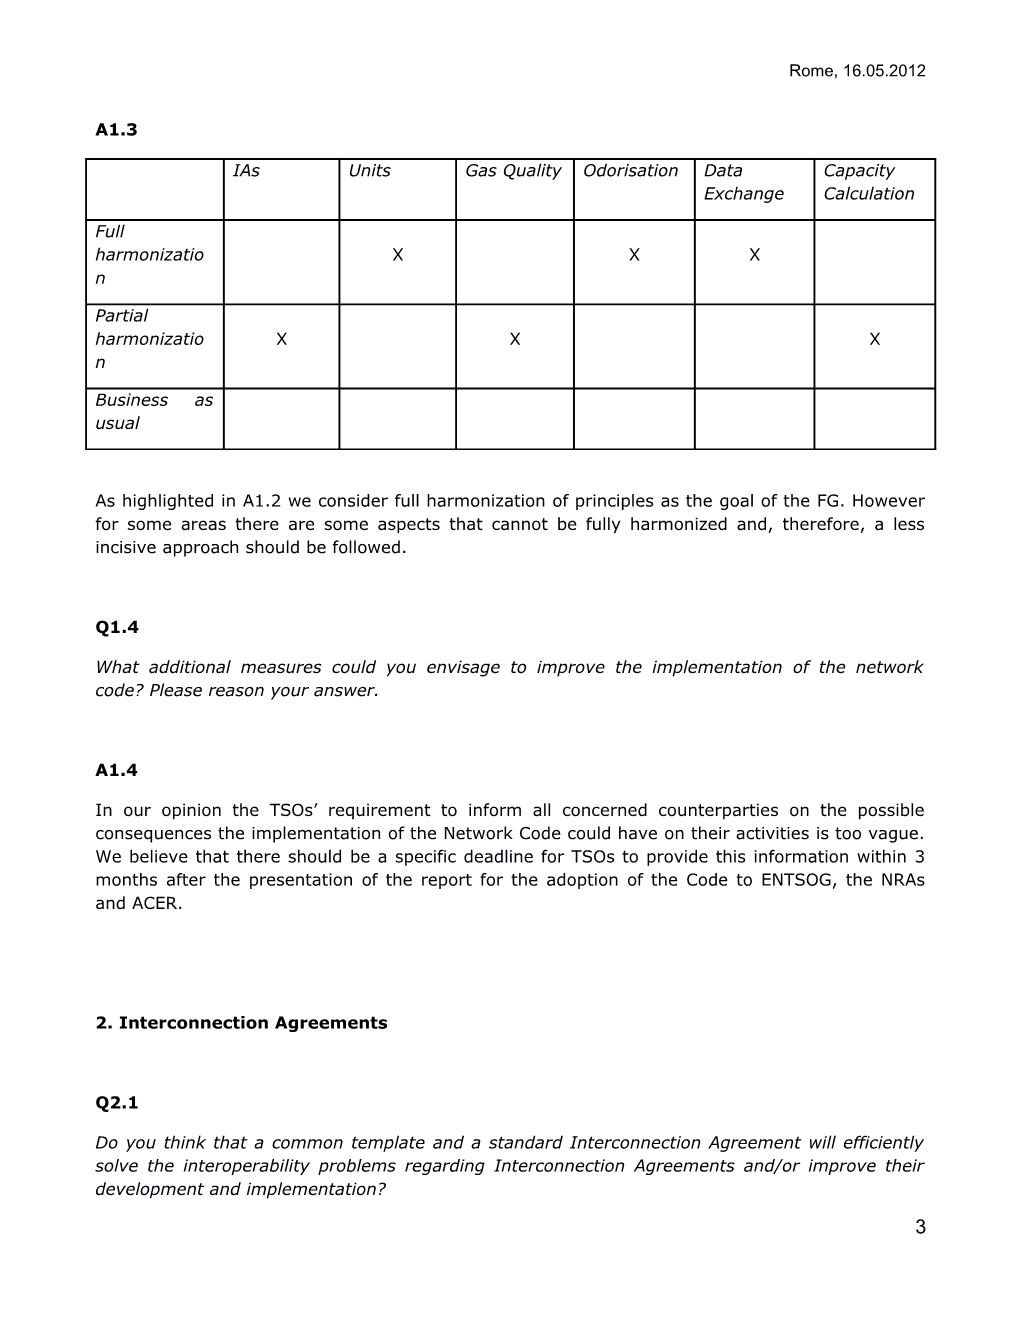 Eni S Response to Acer S Public Consultation on Draft Framework Guidelines on Interoperability